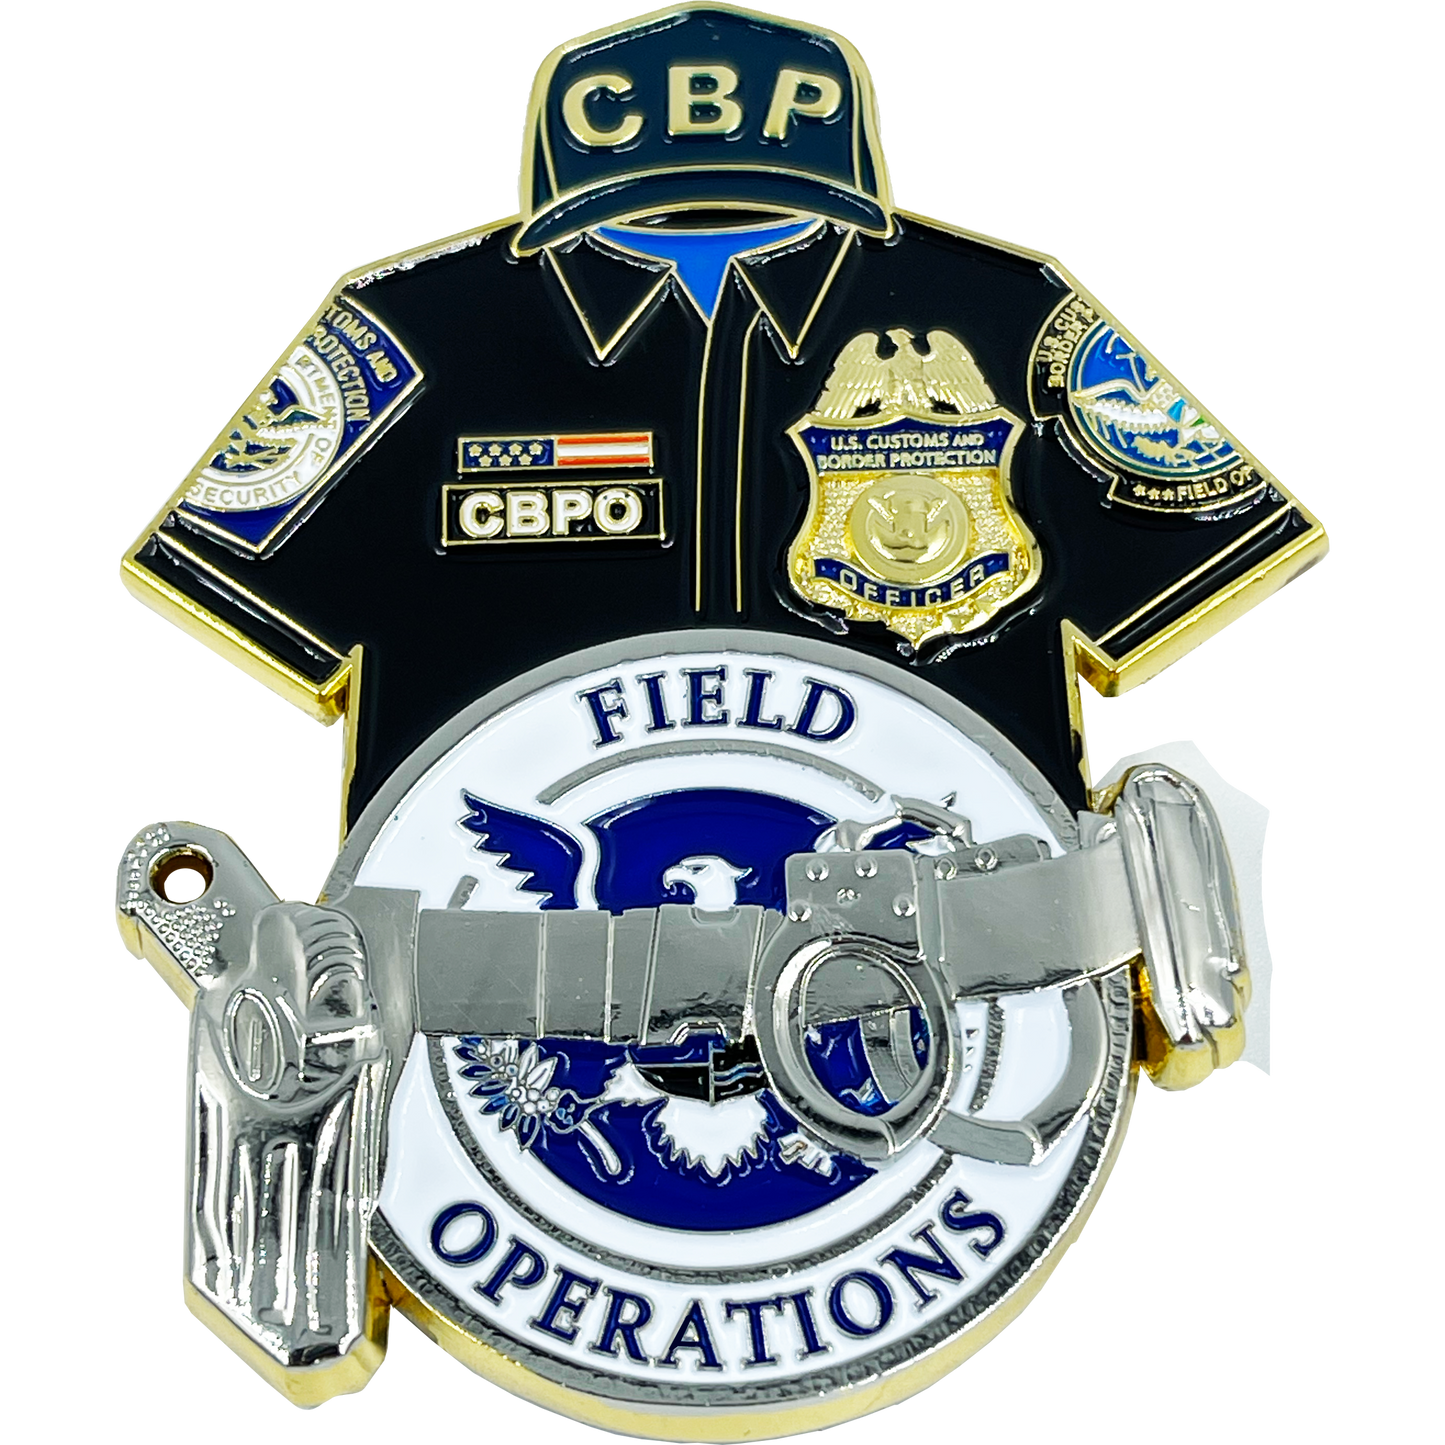 BL6-004 CBP uniform shirt duty belt HK P2000 Field Operations OFO Field Ops Challenge Coin CBPO CBP Officer